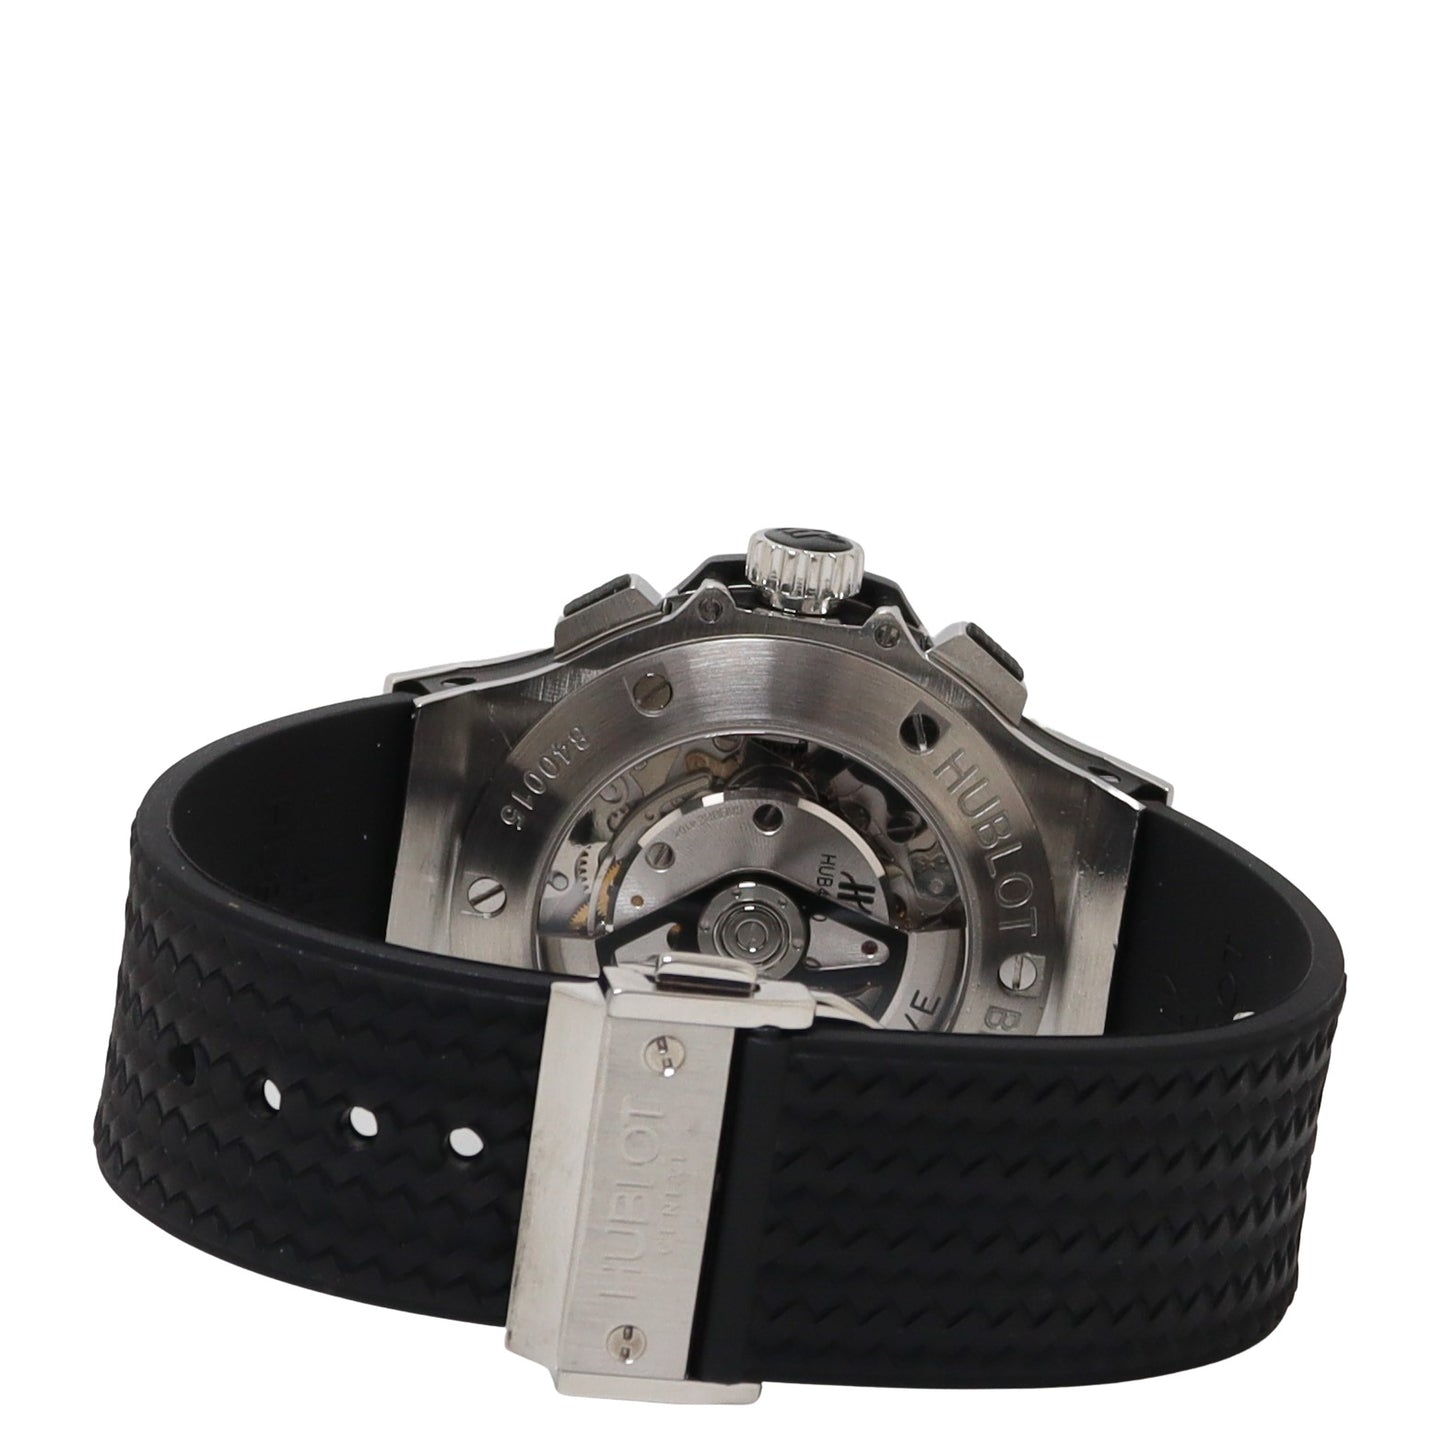 Hublot Big Bang Stainless Steel 44mm Black Arabic & Stick Dial Watch Reference #: 301.SB.131.RX - Happy Jewelers Fine Jewelry Lifetime Warranty